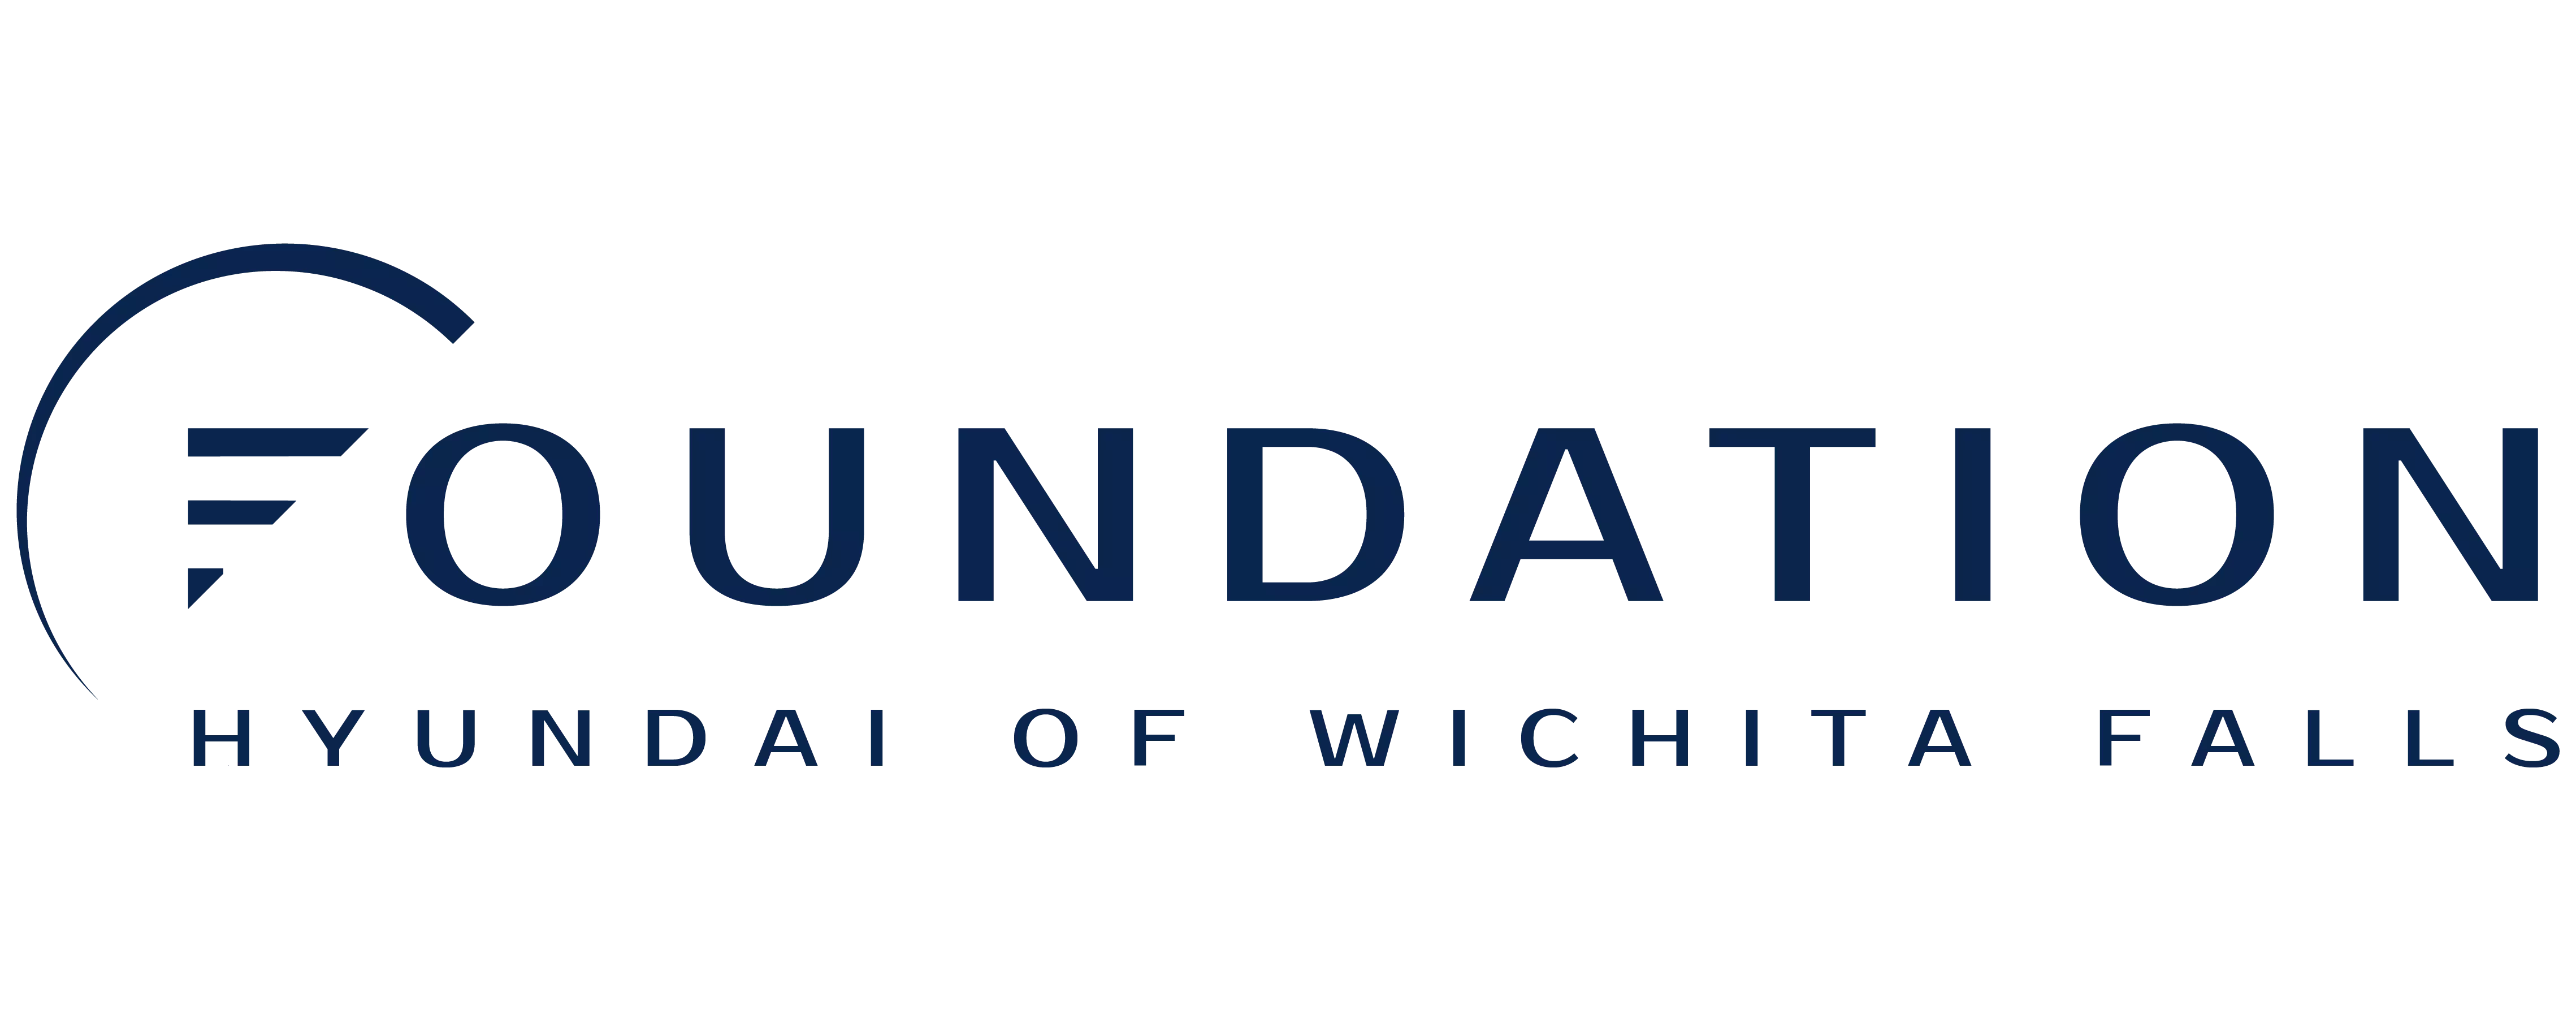 Foundation Hyundai of Wichita Falls-logo